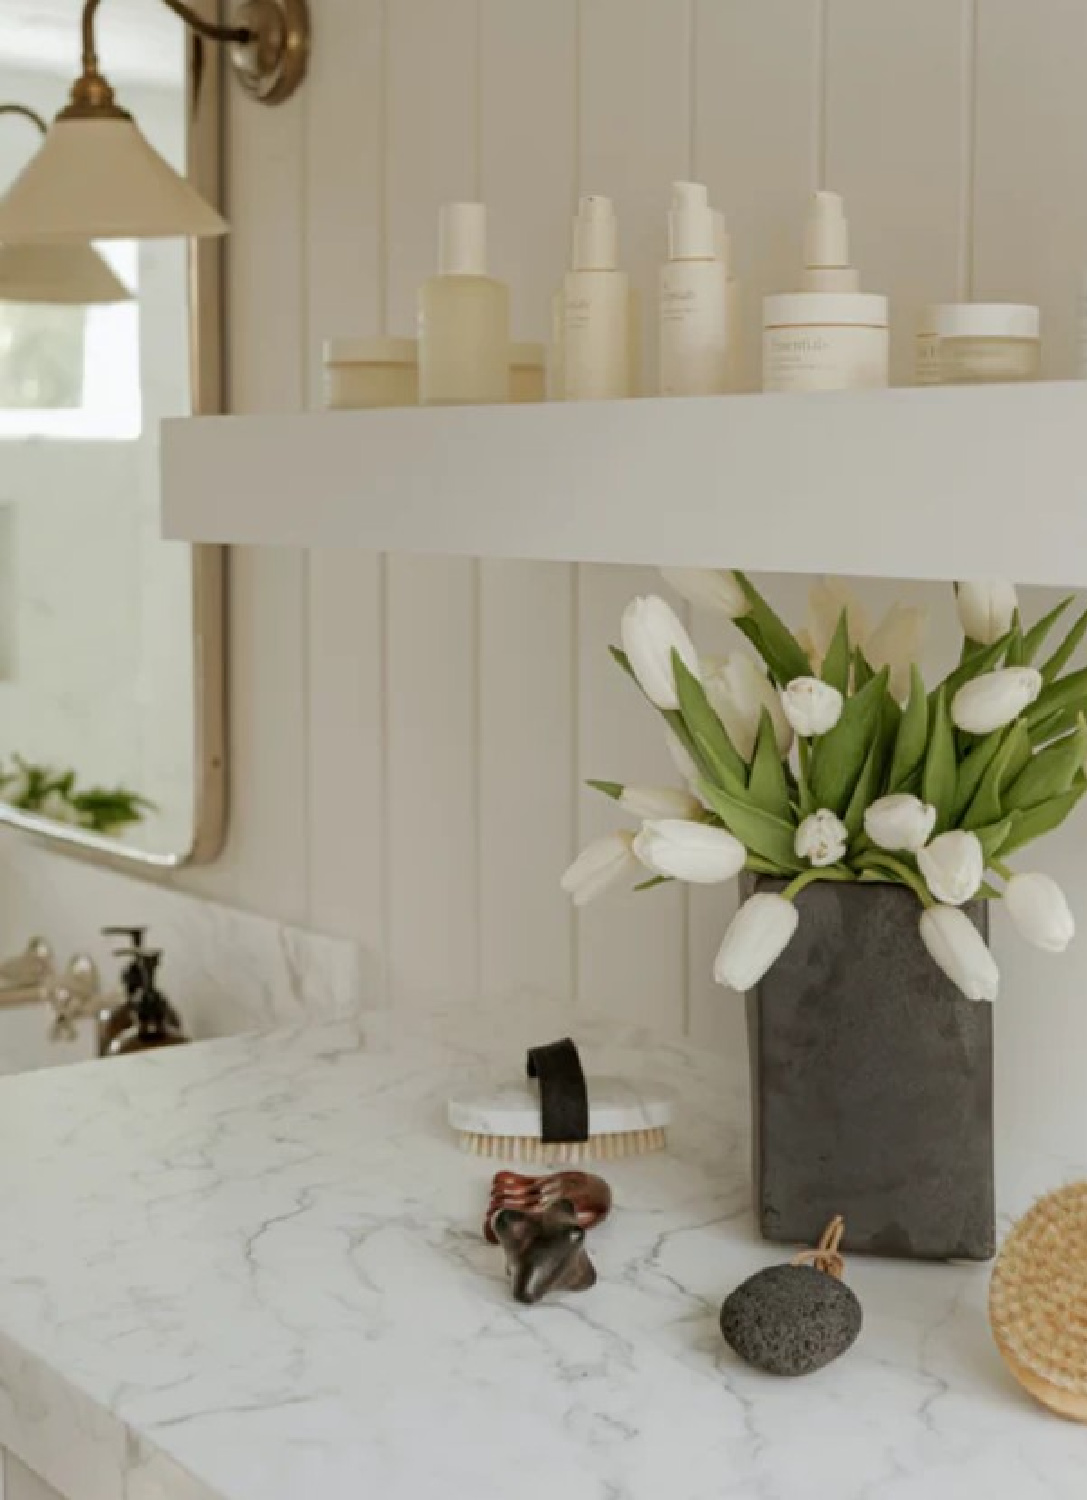 White bath with Jenni Kayne Oak Essentials product on shelf.